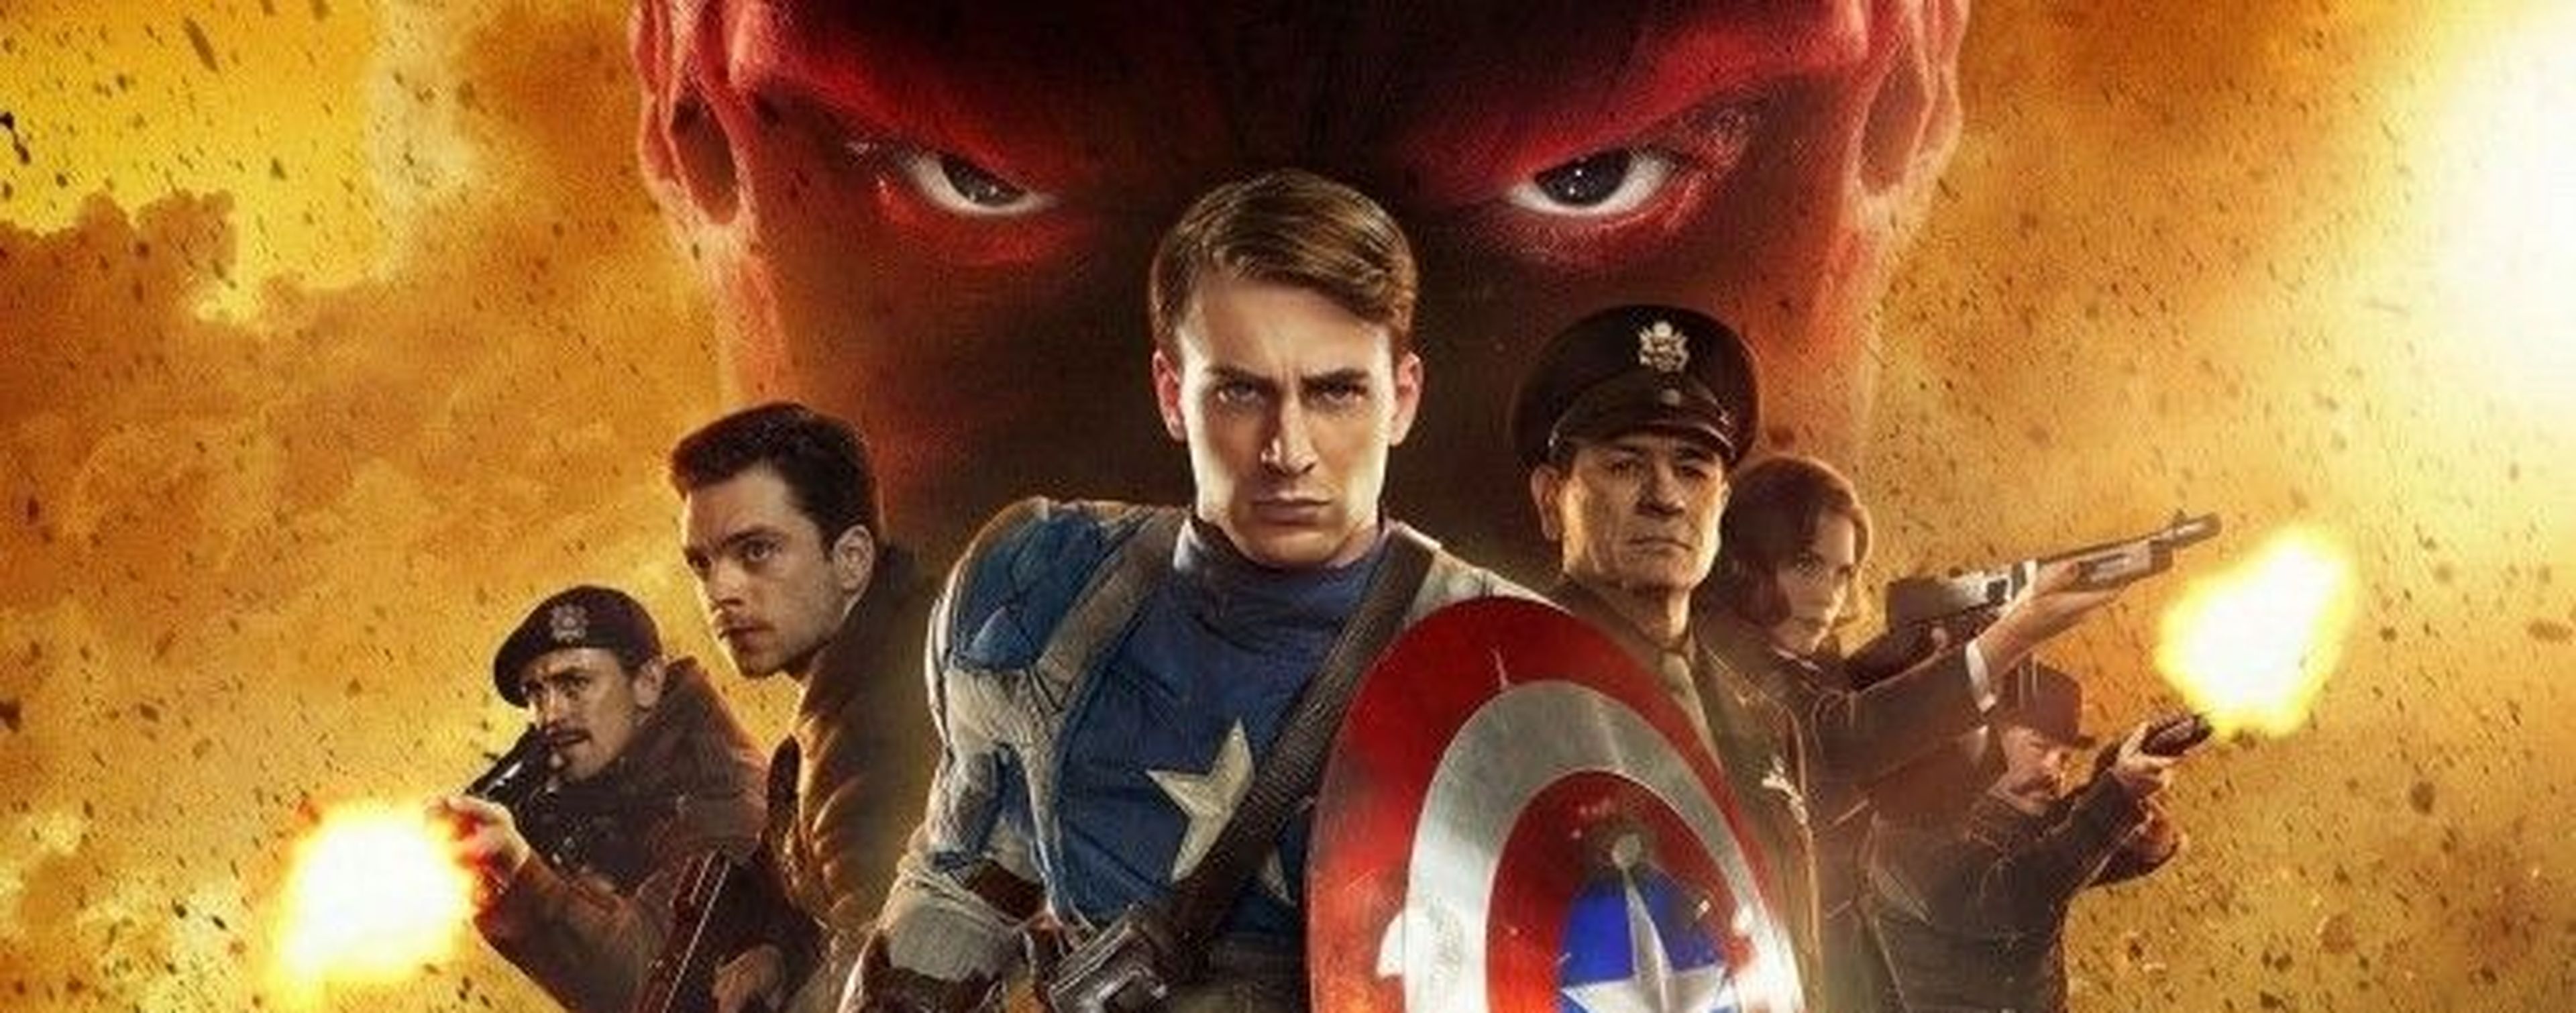 Capitán América El Primer Vengador